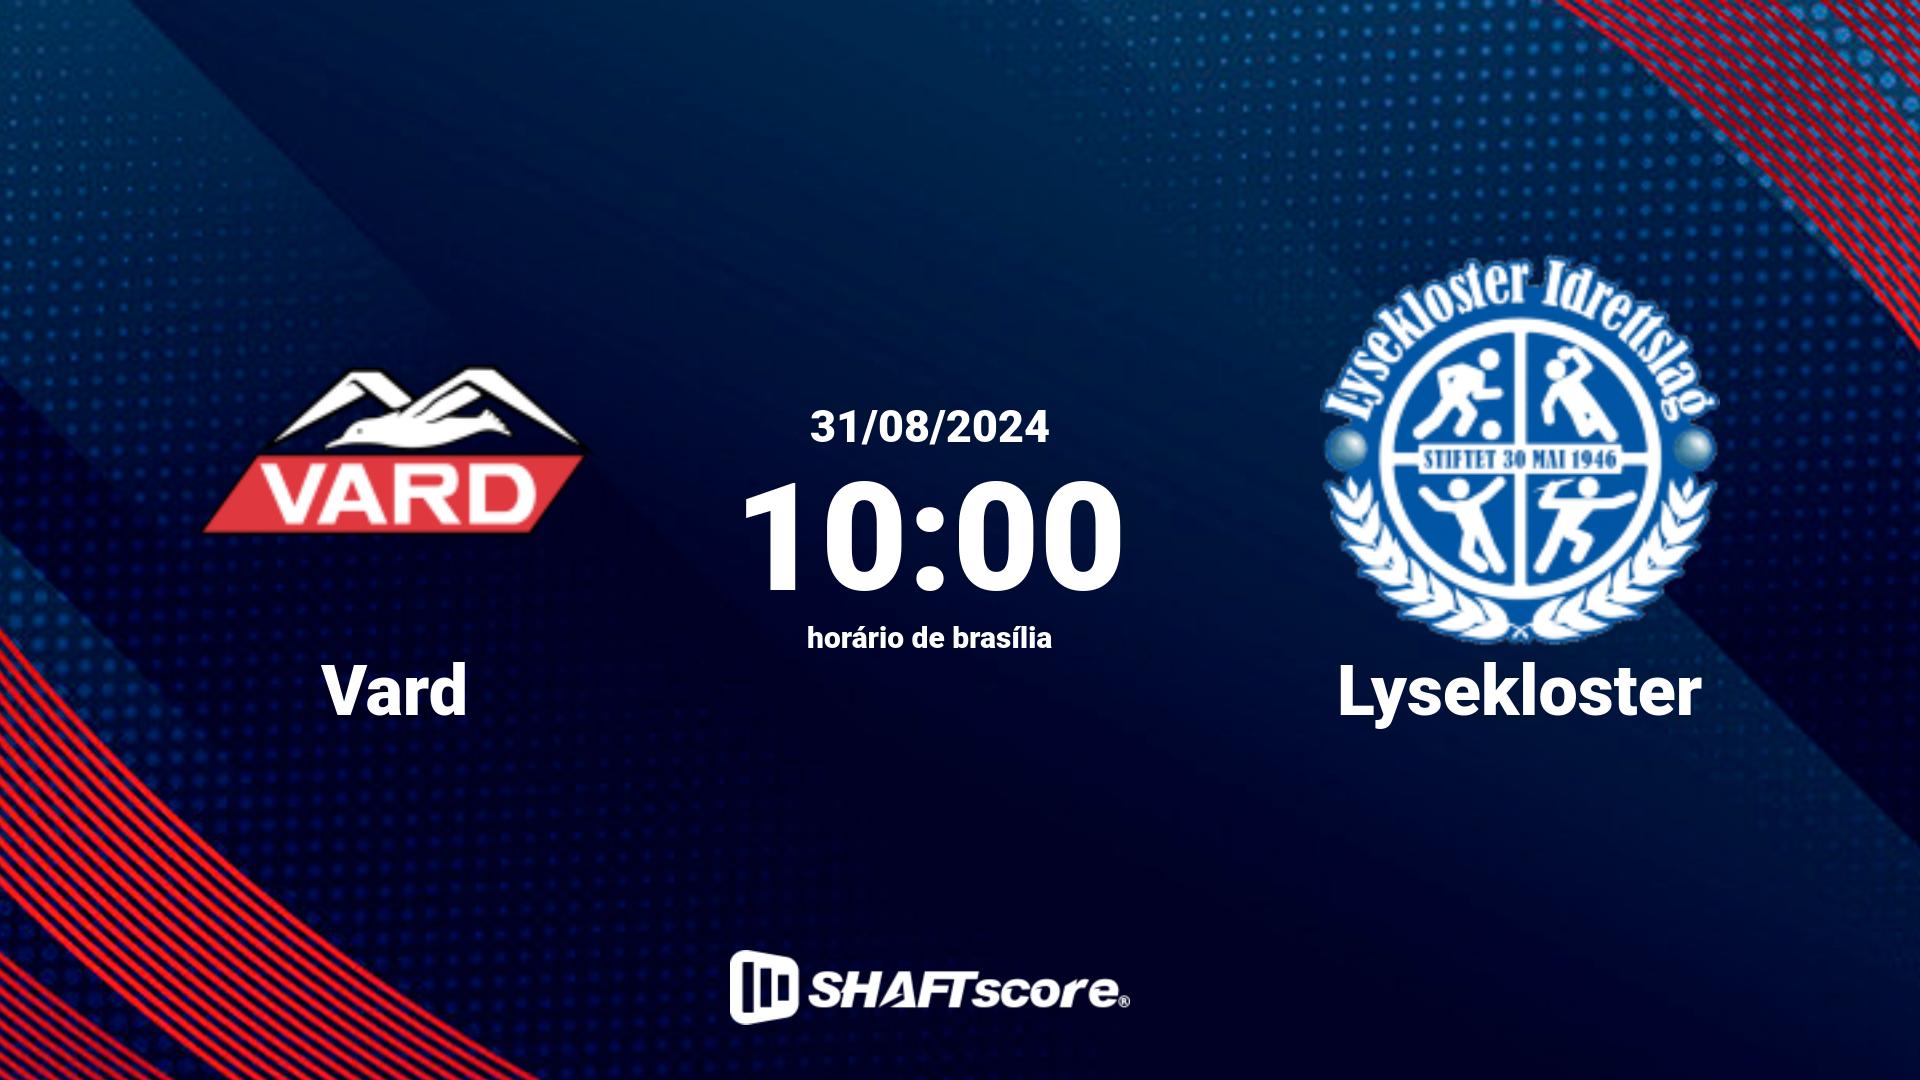 Estatísticas do jogo Vard vs Lysekloster 31.08 10:00